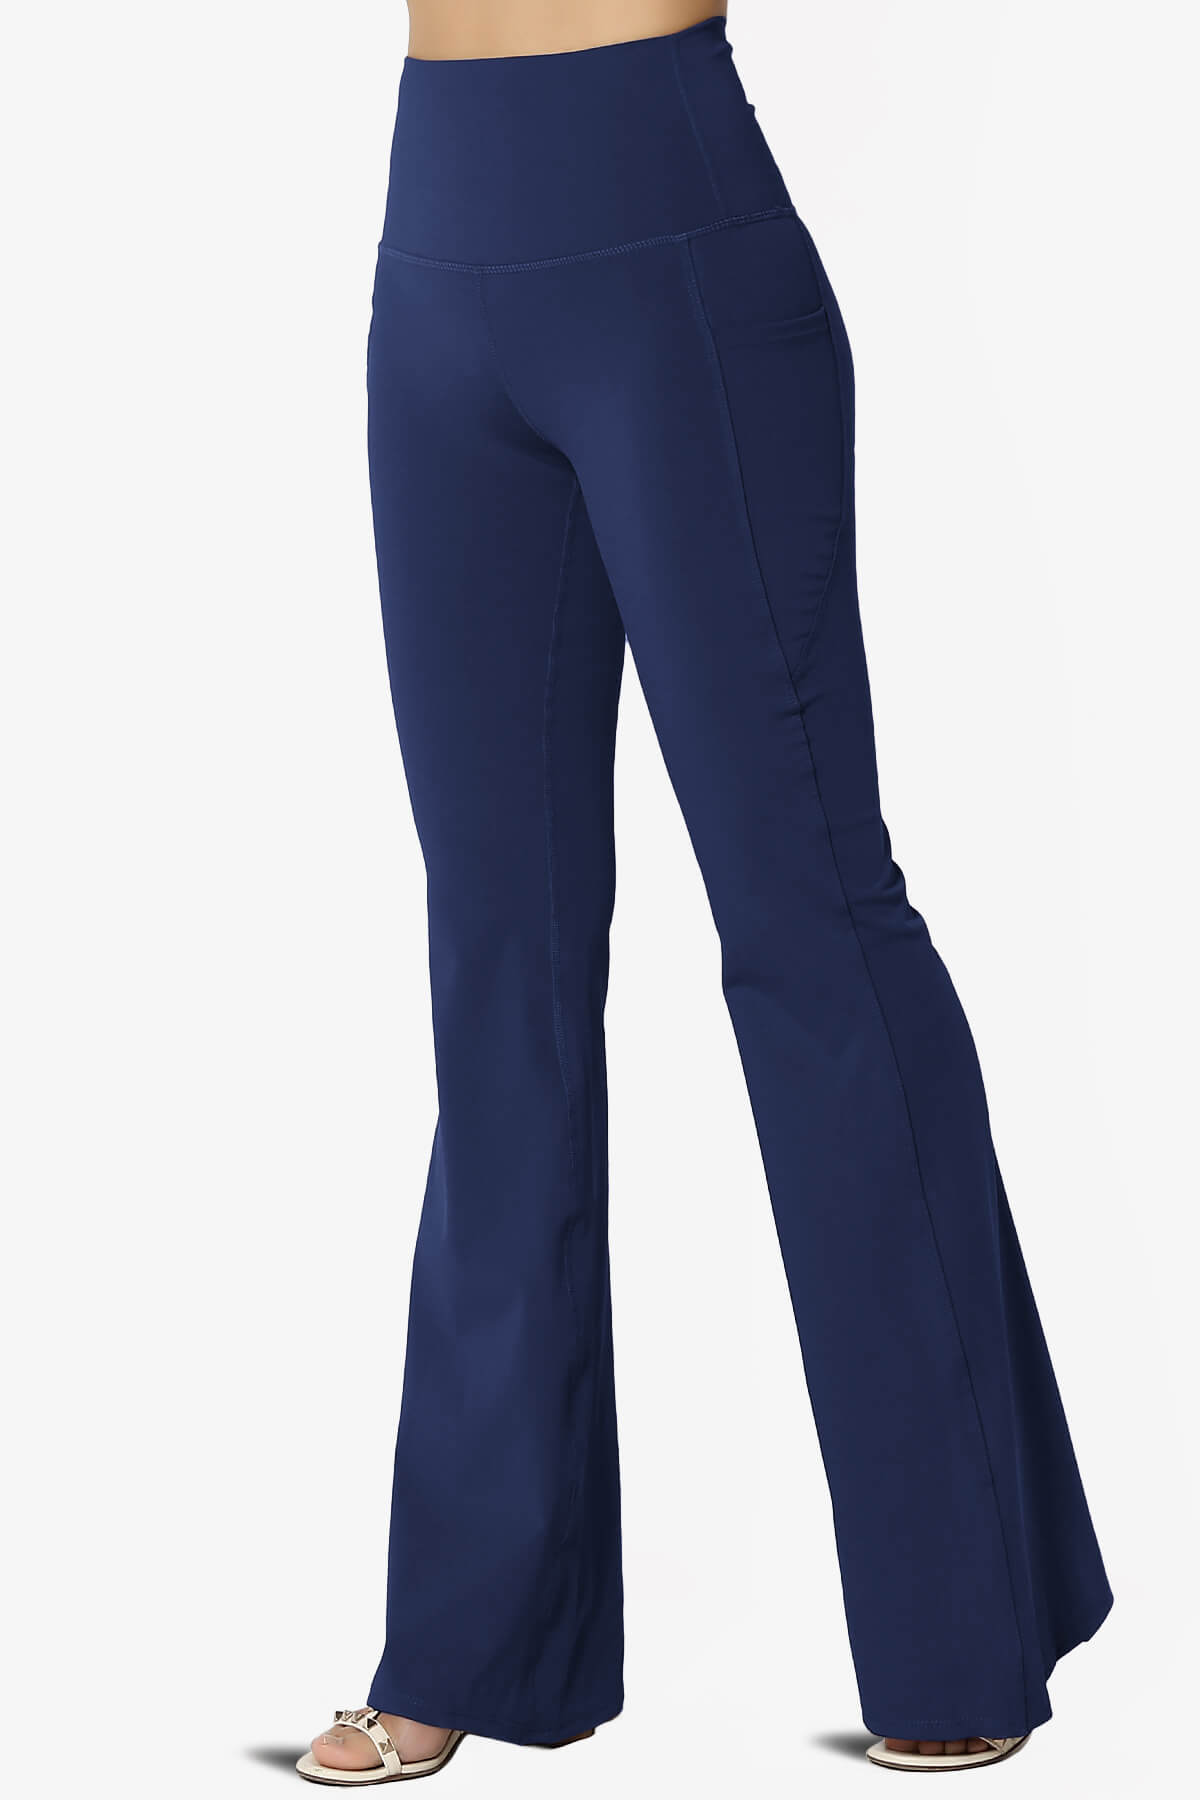 Gemma Athletic Pocket Flare Yoga Pants LIGHT NAVY_3